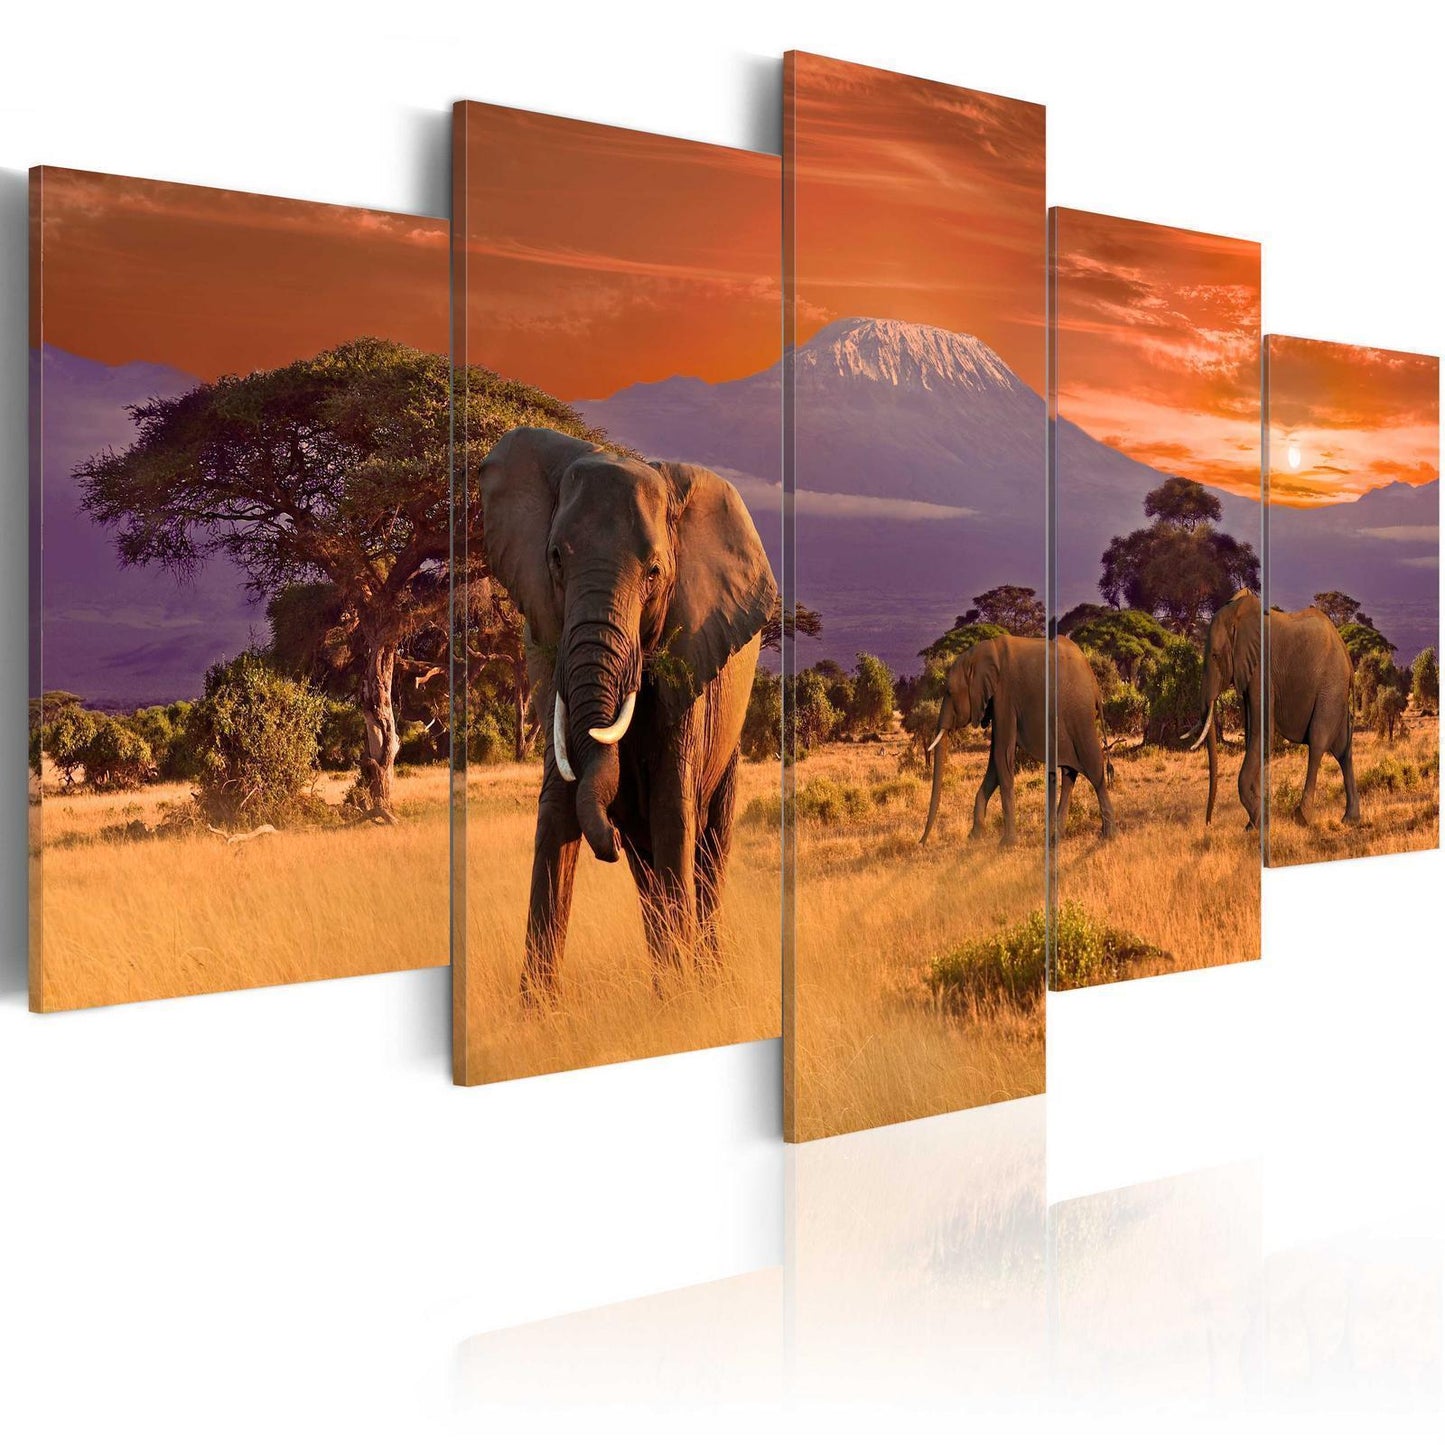 Painting - Africa: Elephants